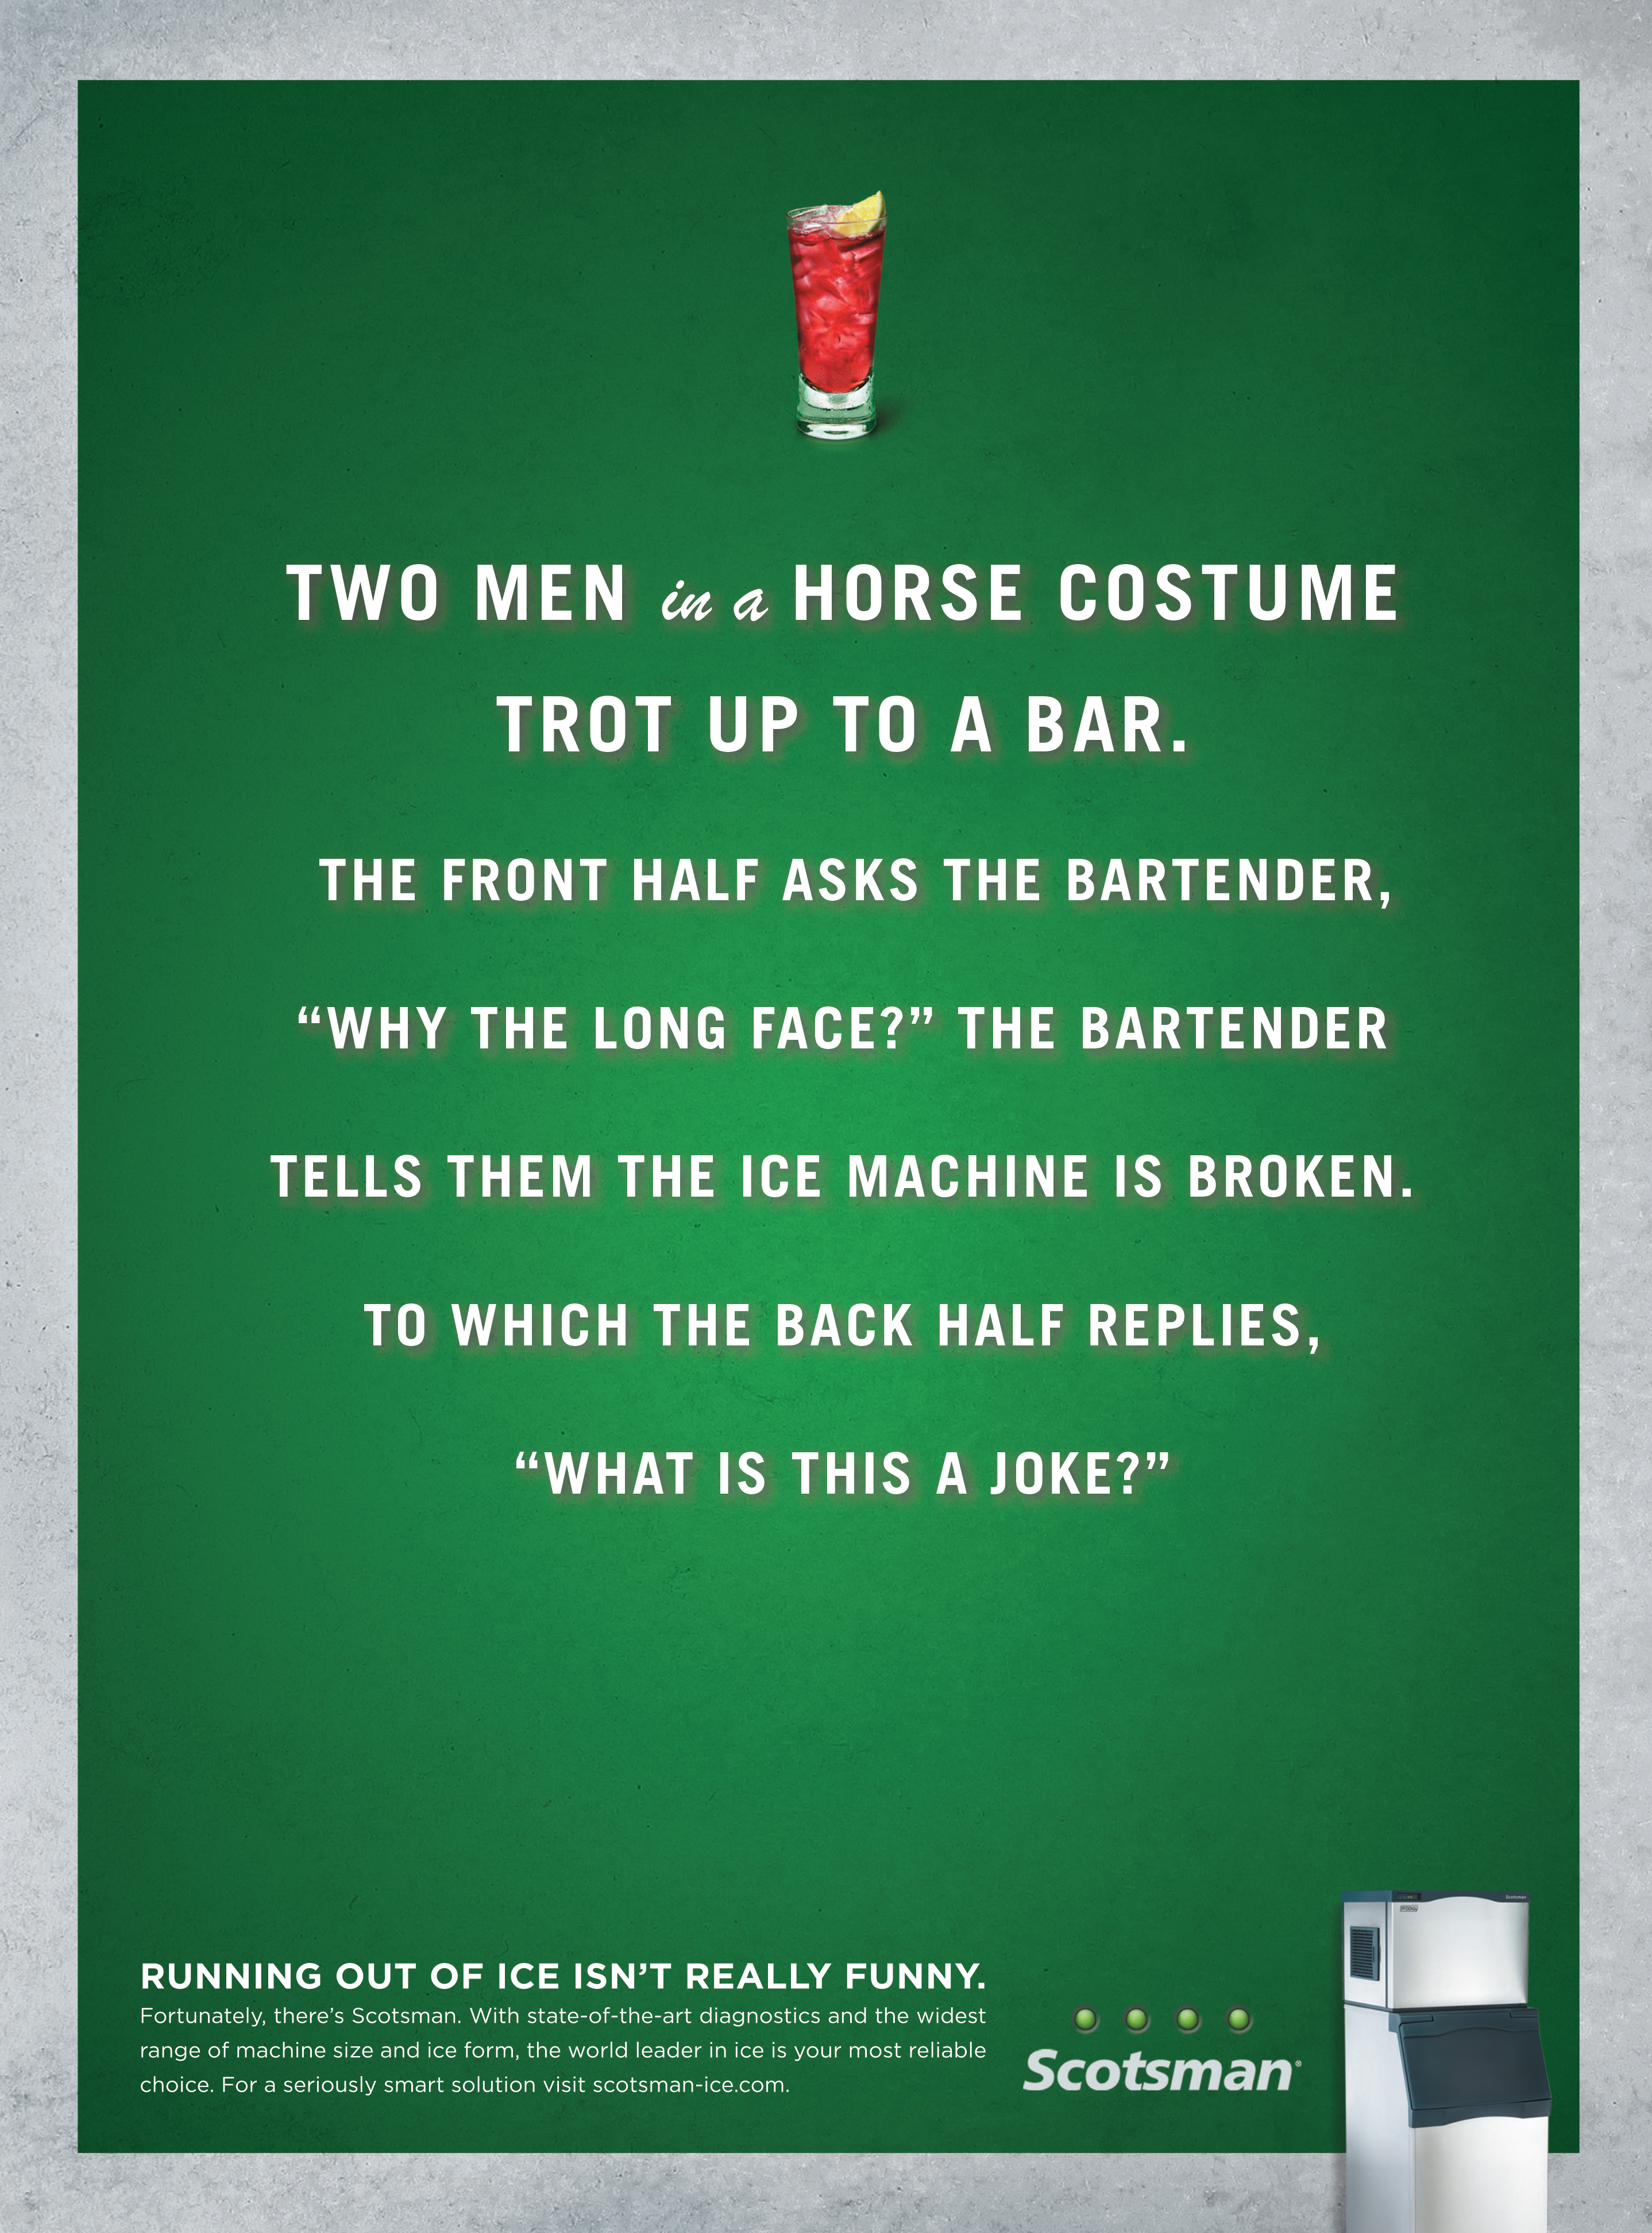 Scotsman Ad_2 men in a horse